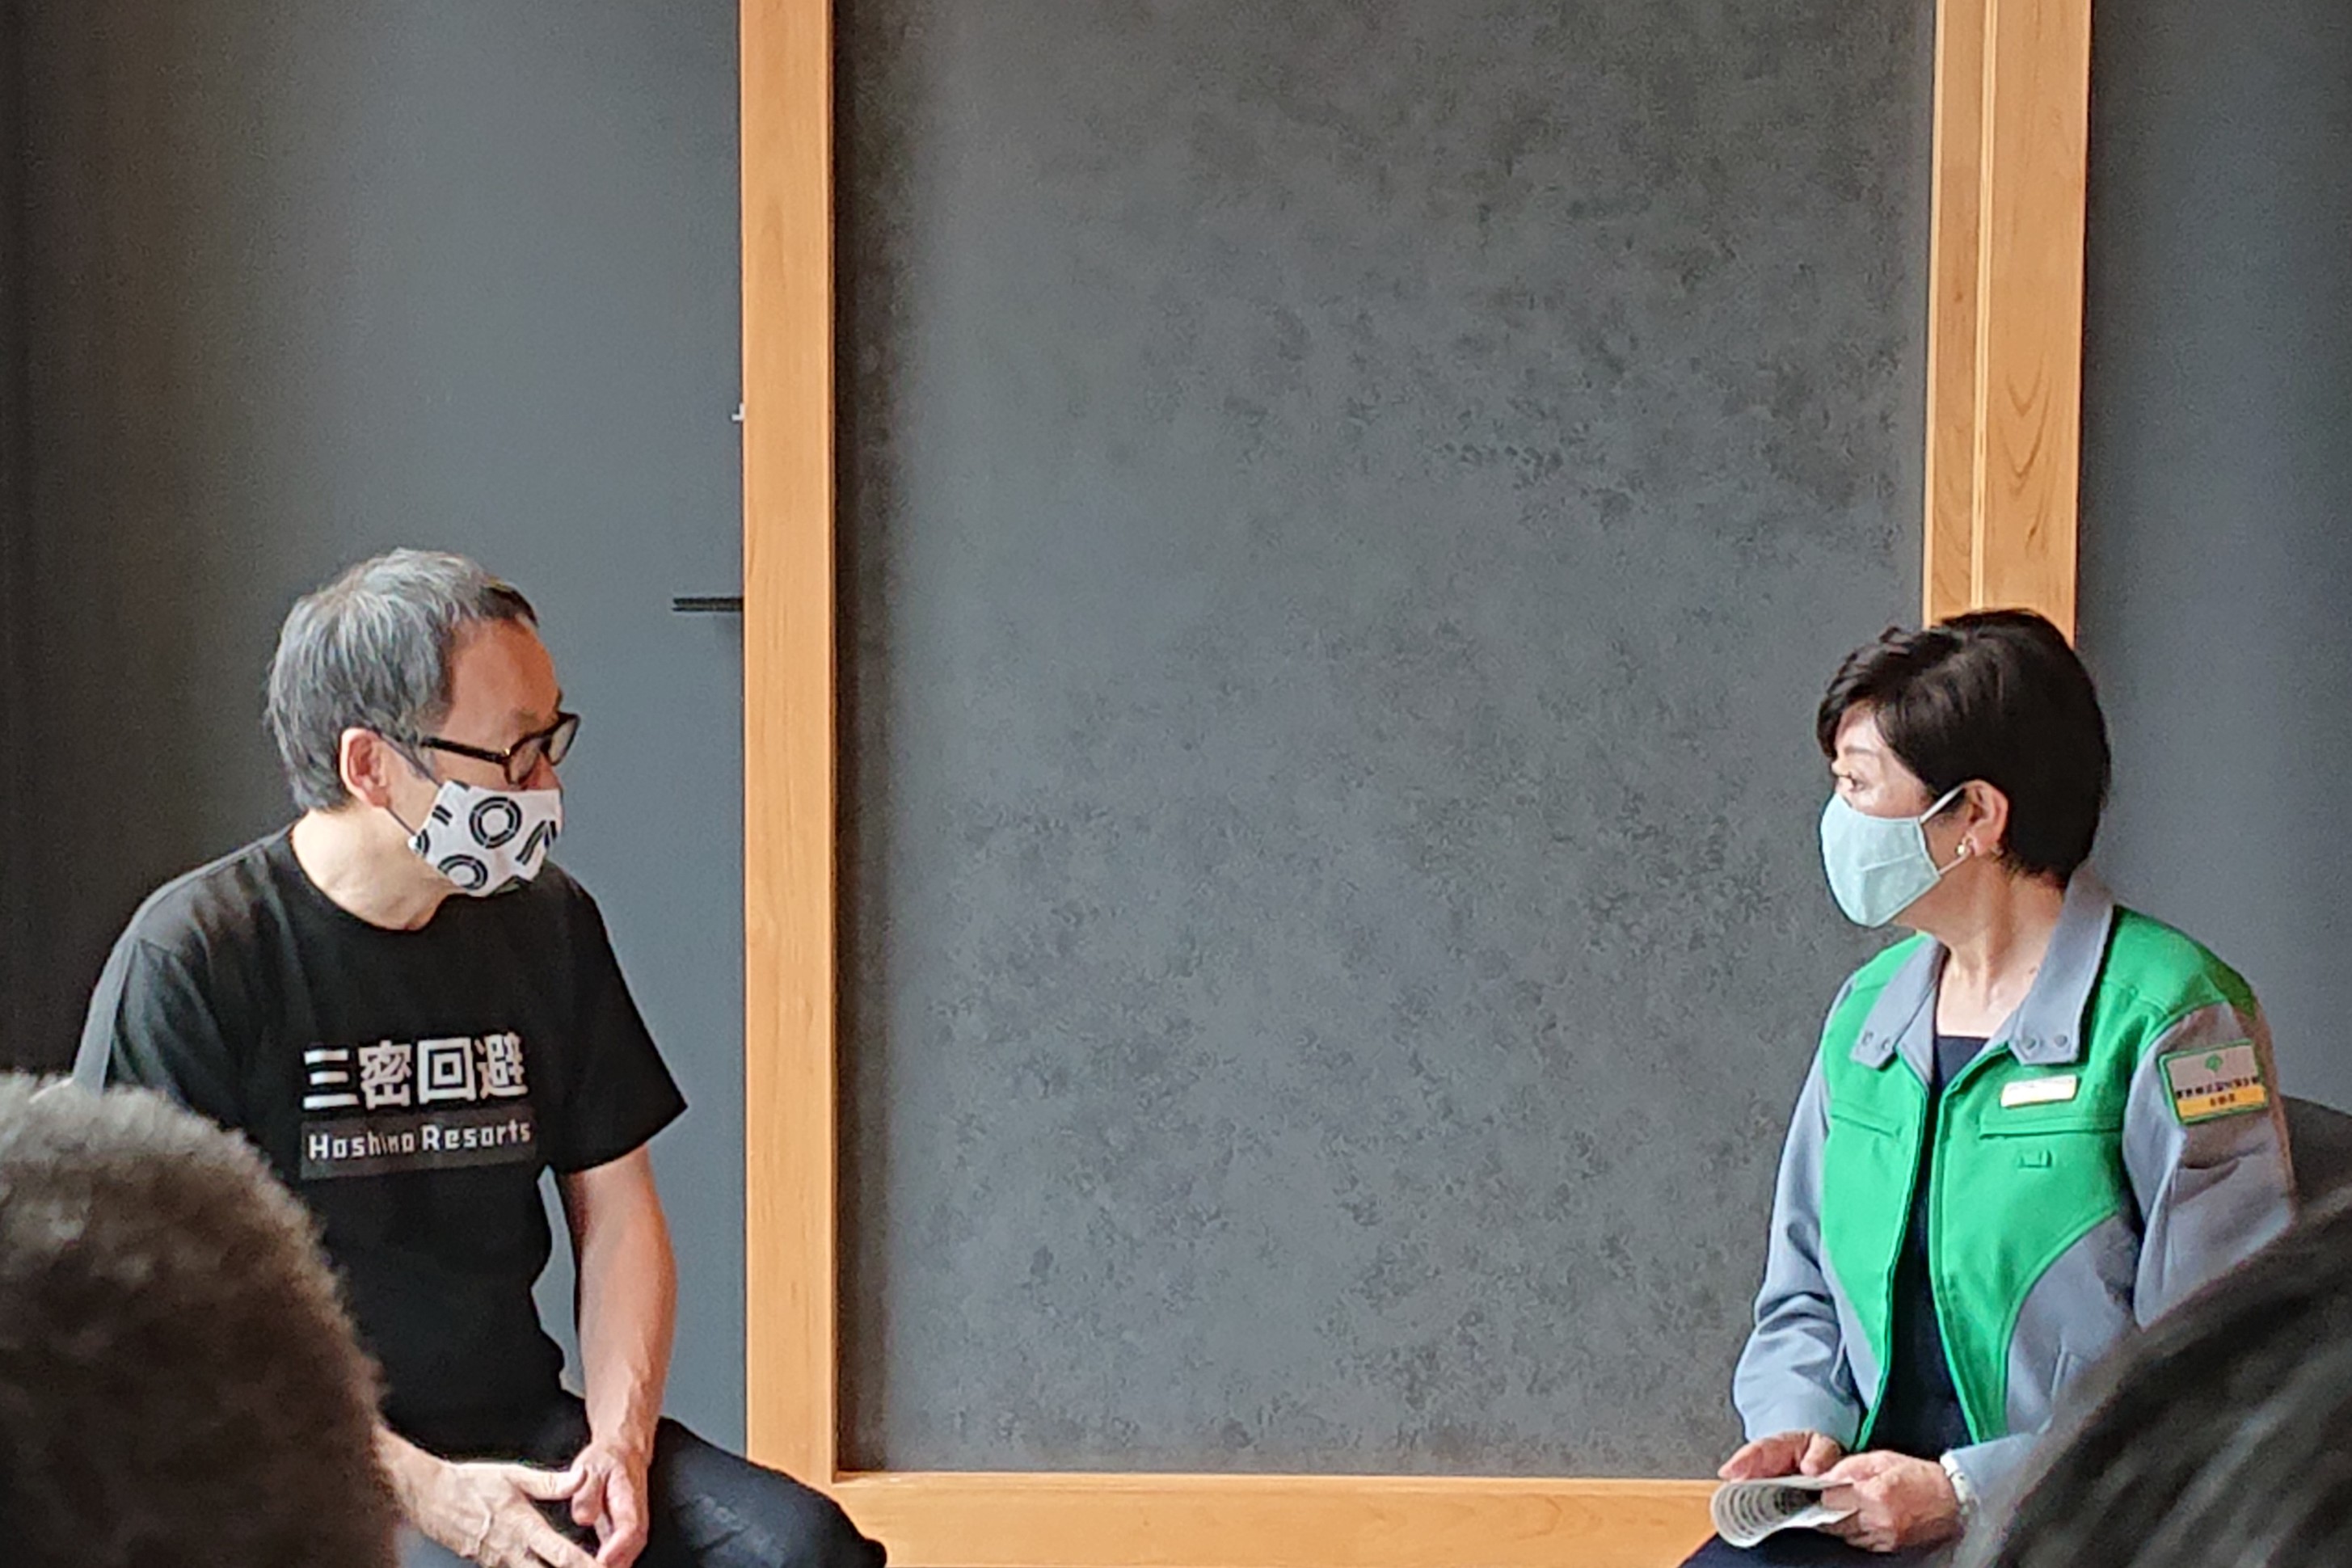 【OMO5東京大塚】東京都知事がOMO5東京大塚を視察、「感染防止対策徹底ホテル」として好評をいただきました。 2020年6月27日